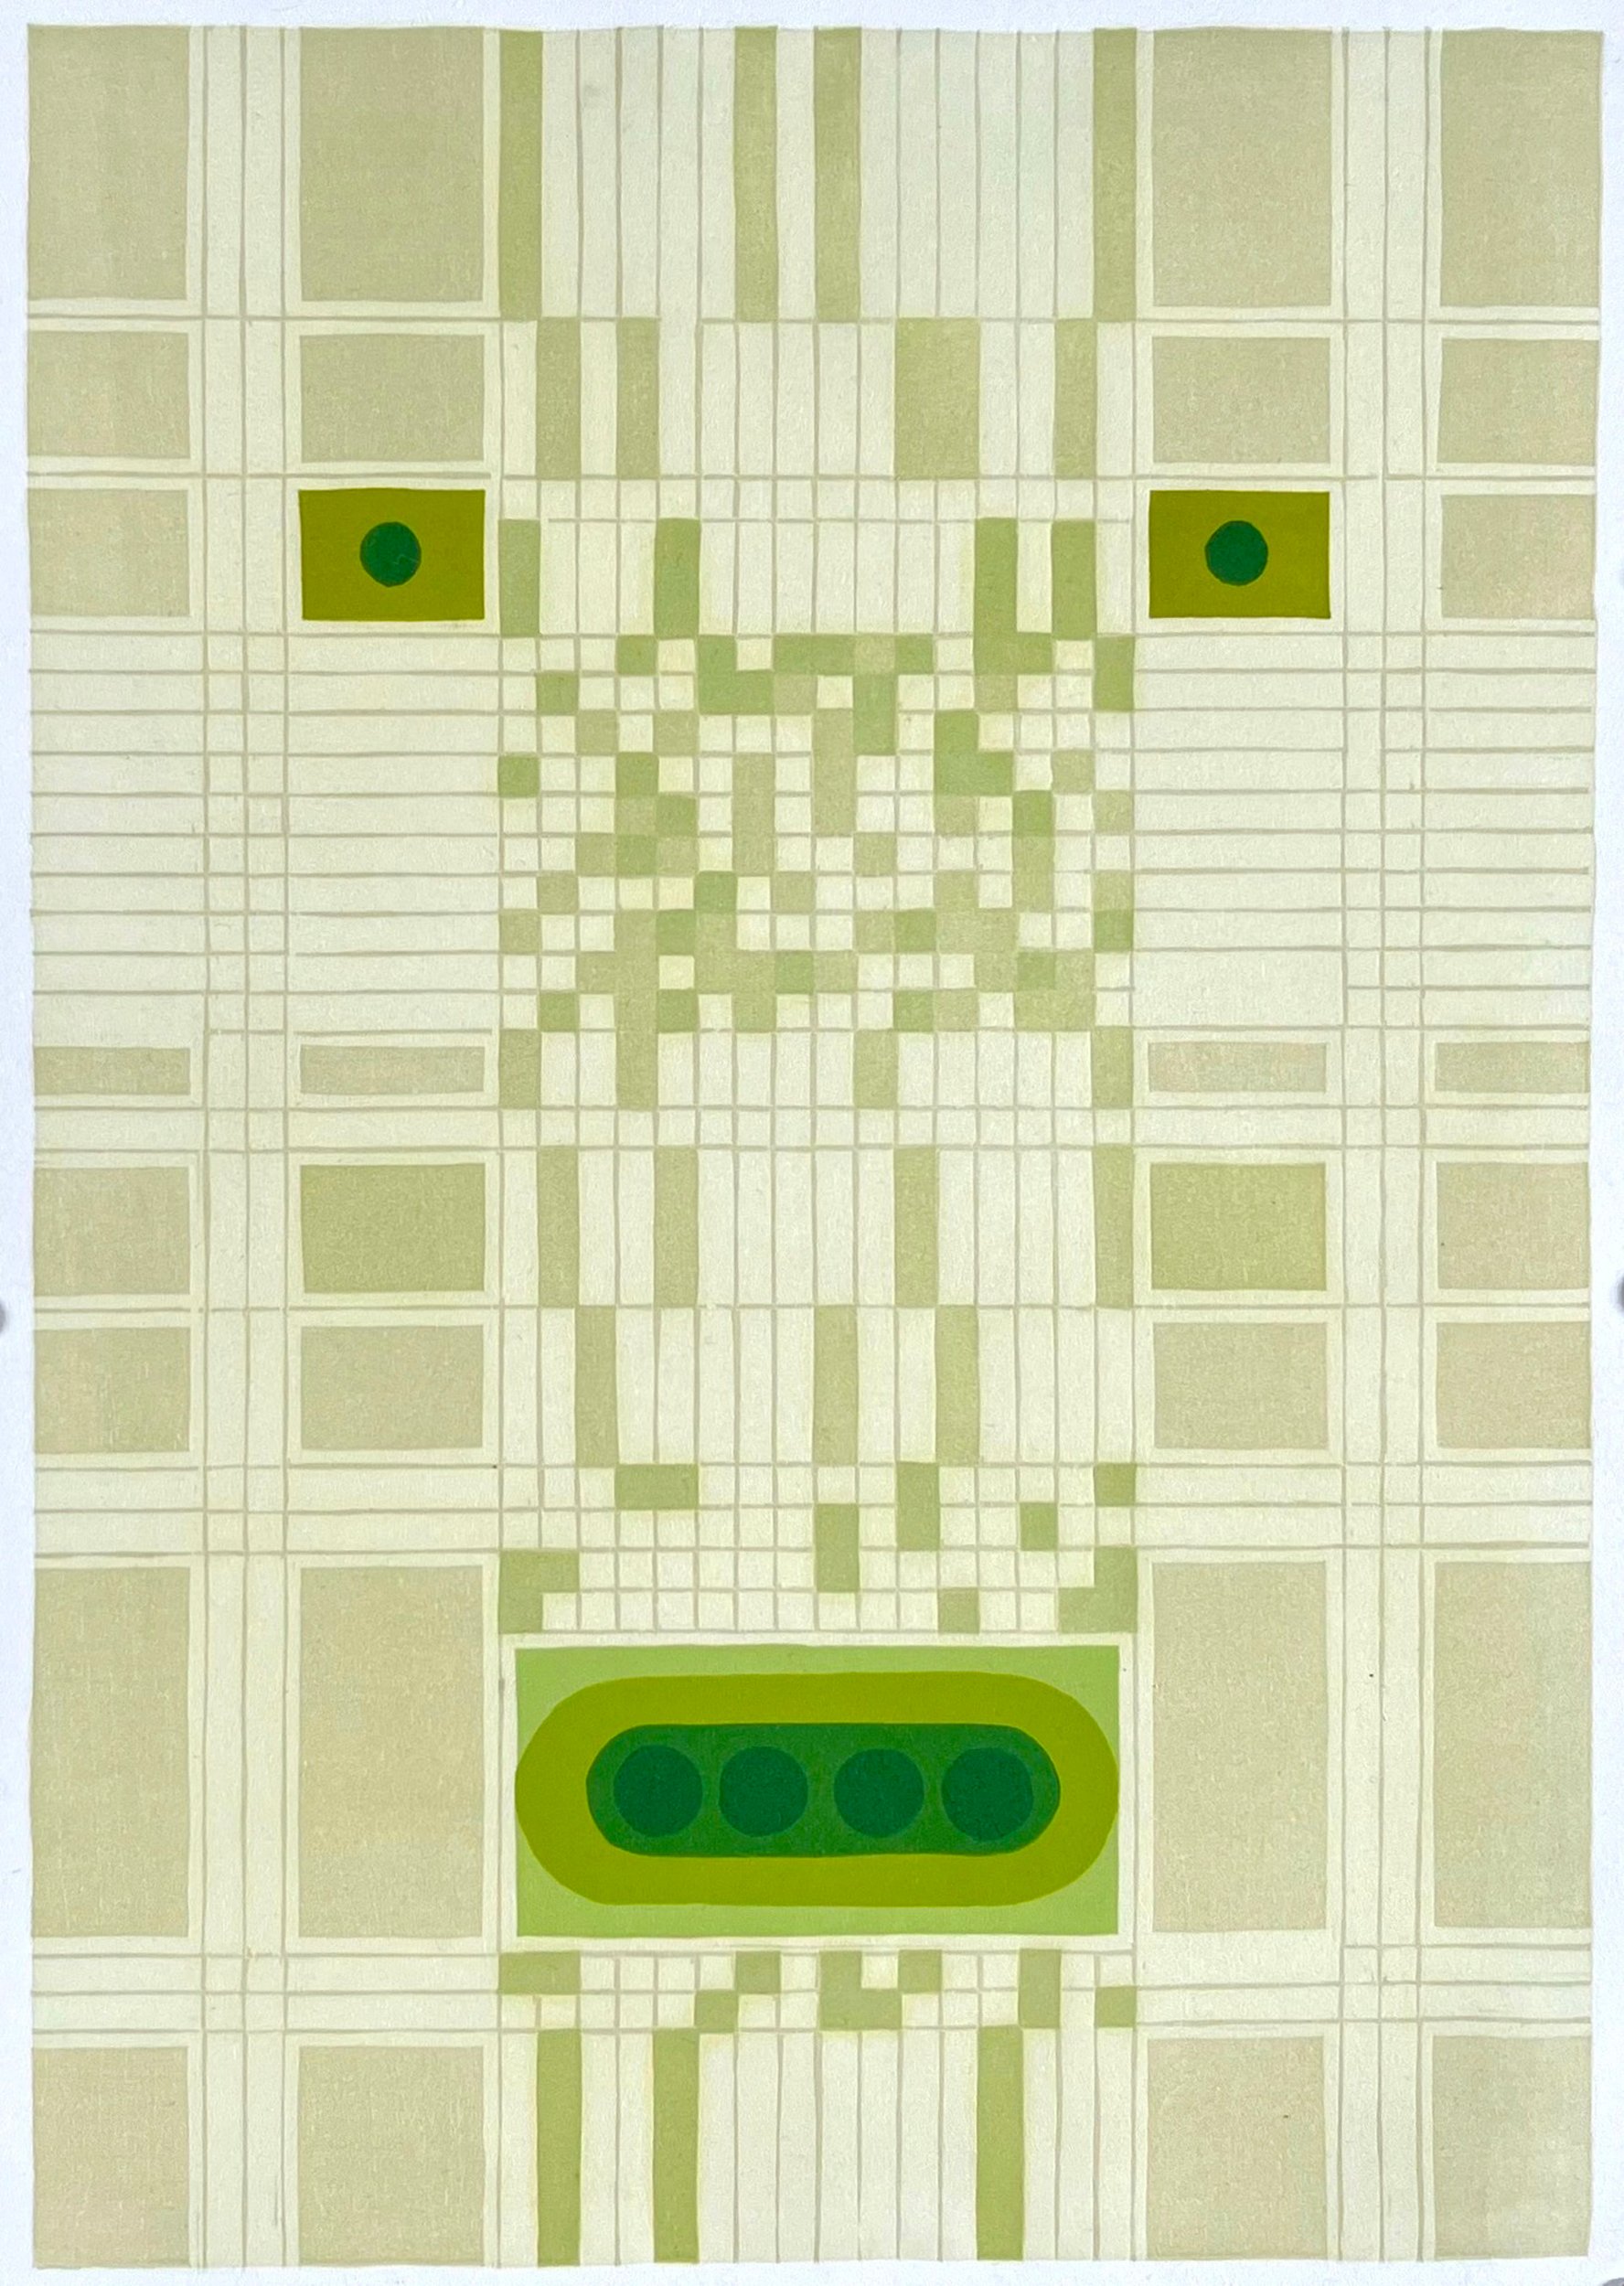  Catherine Sollman    Animal Grid 1 (Green)    Woodcut 